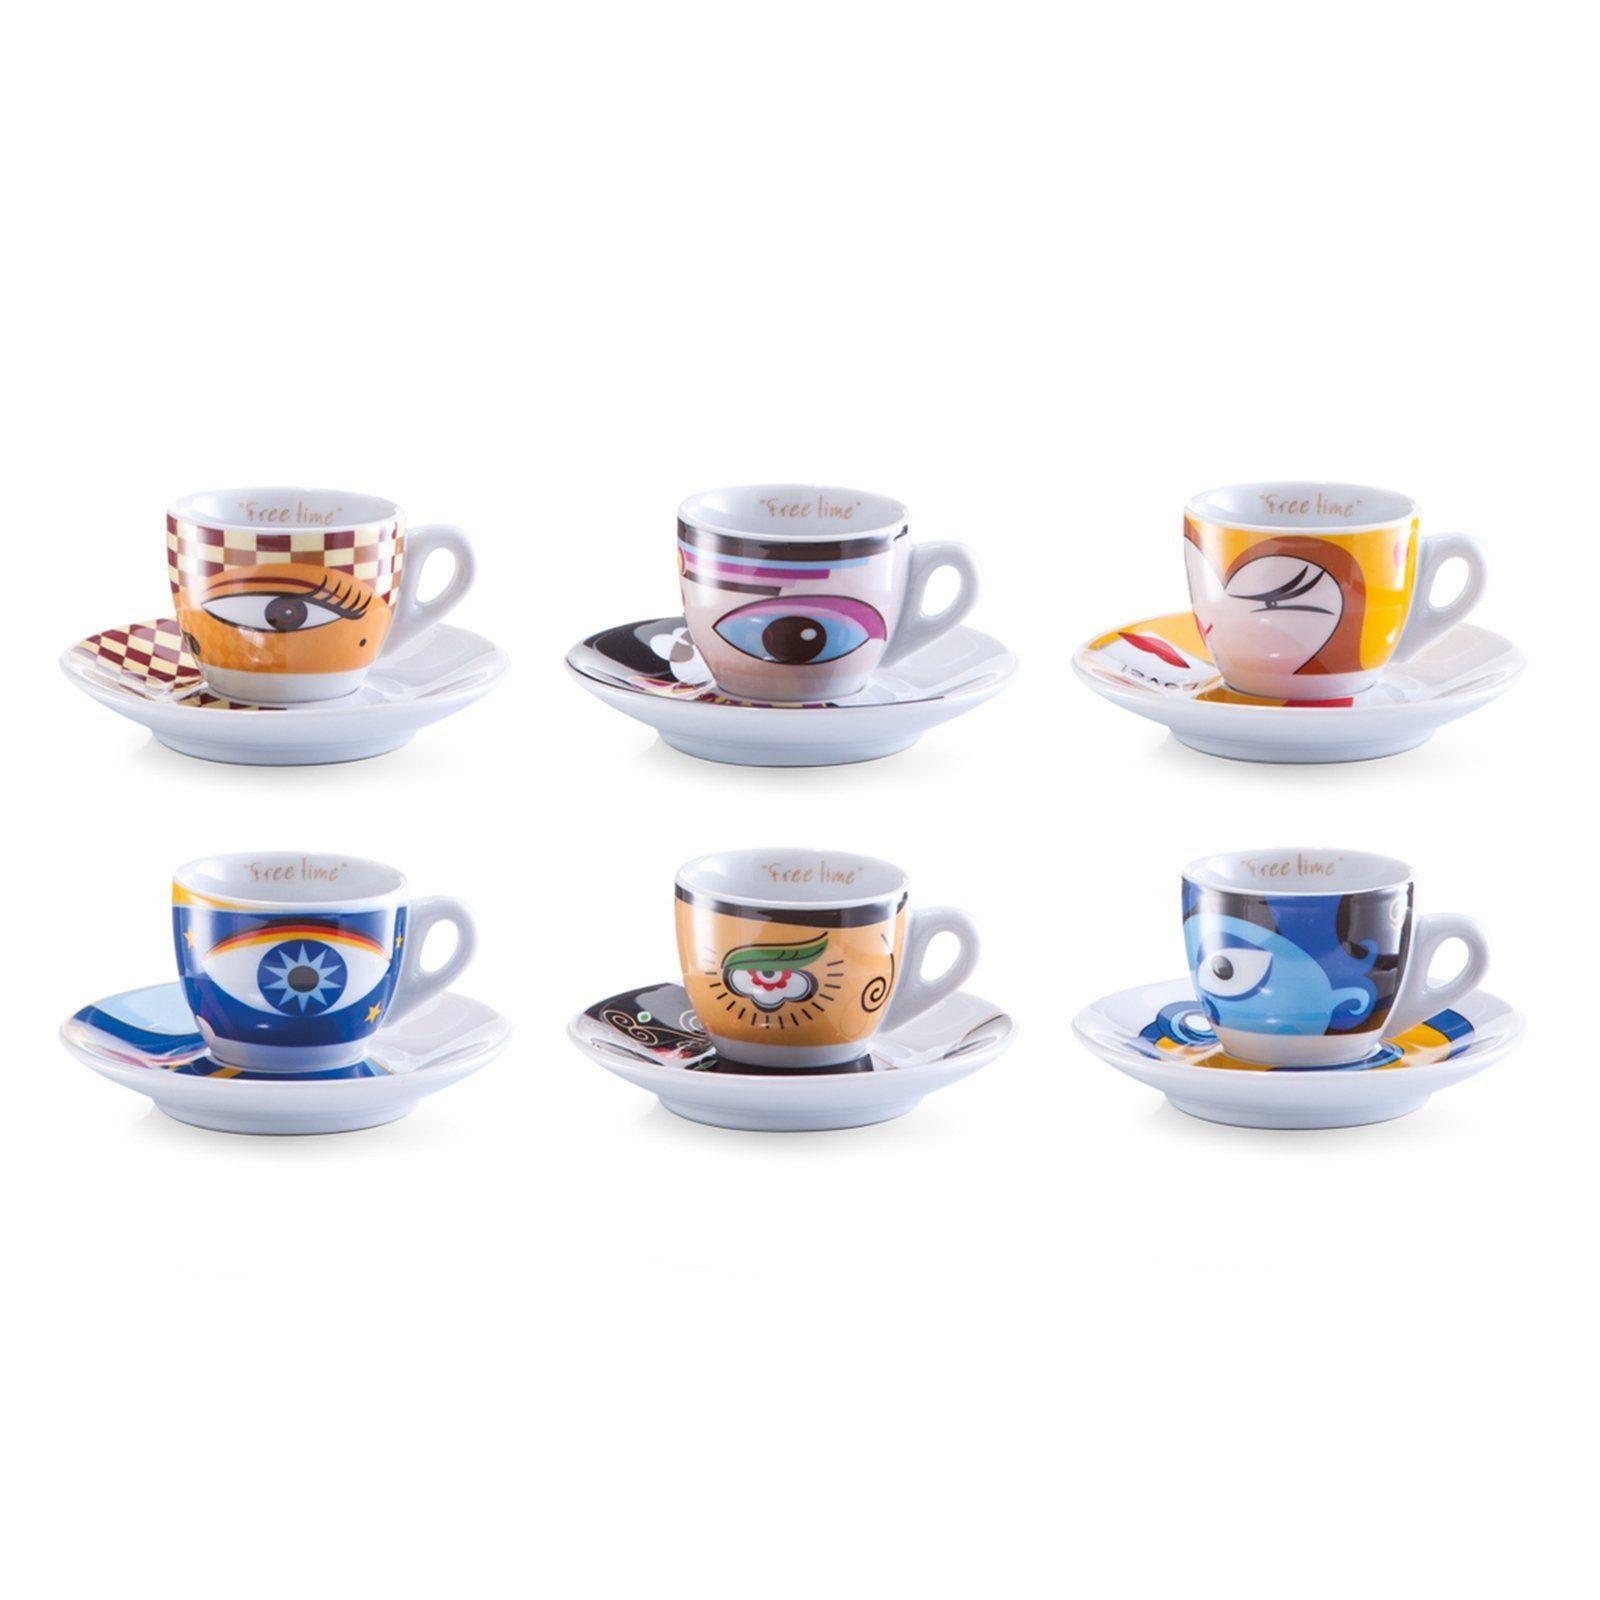 Neuetischkultur Espressotasse Espresso-Set 12-teilig, Porzellan Blau